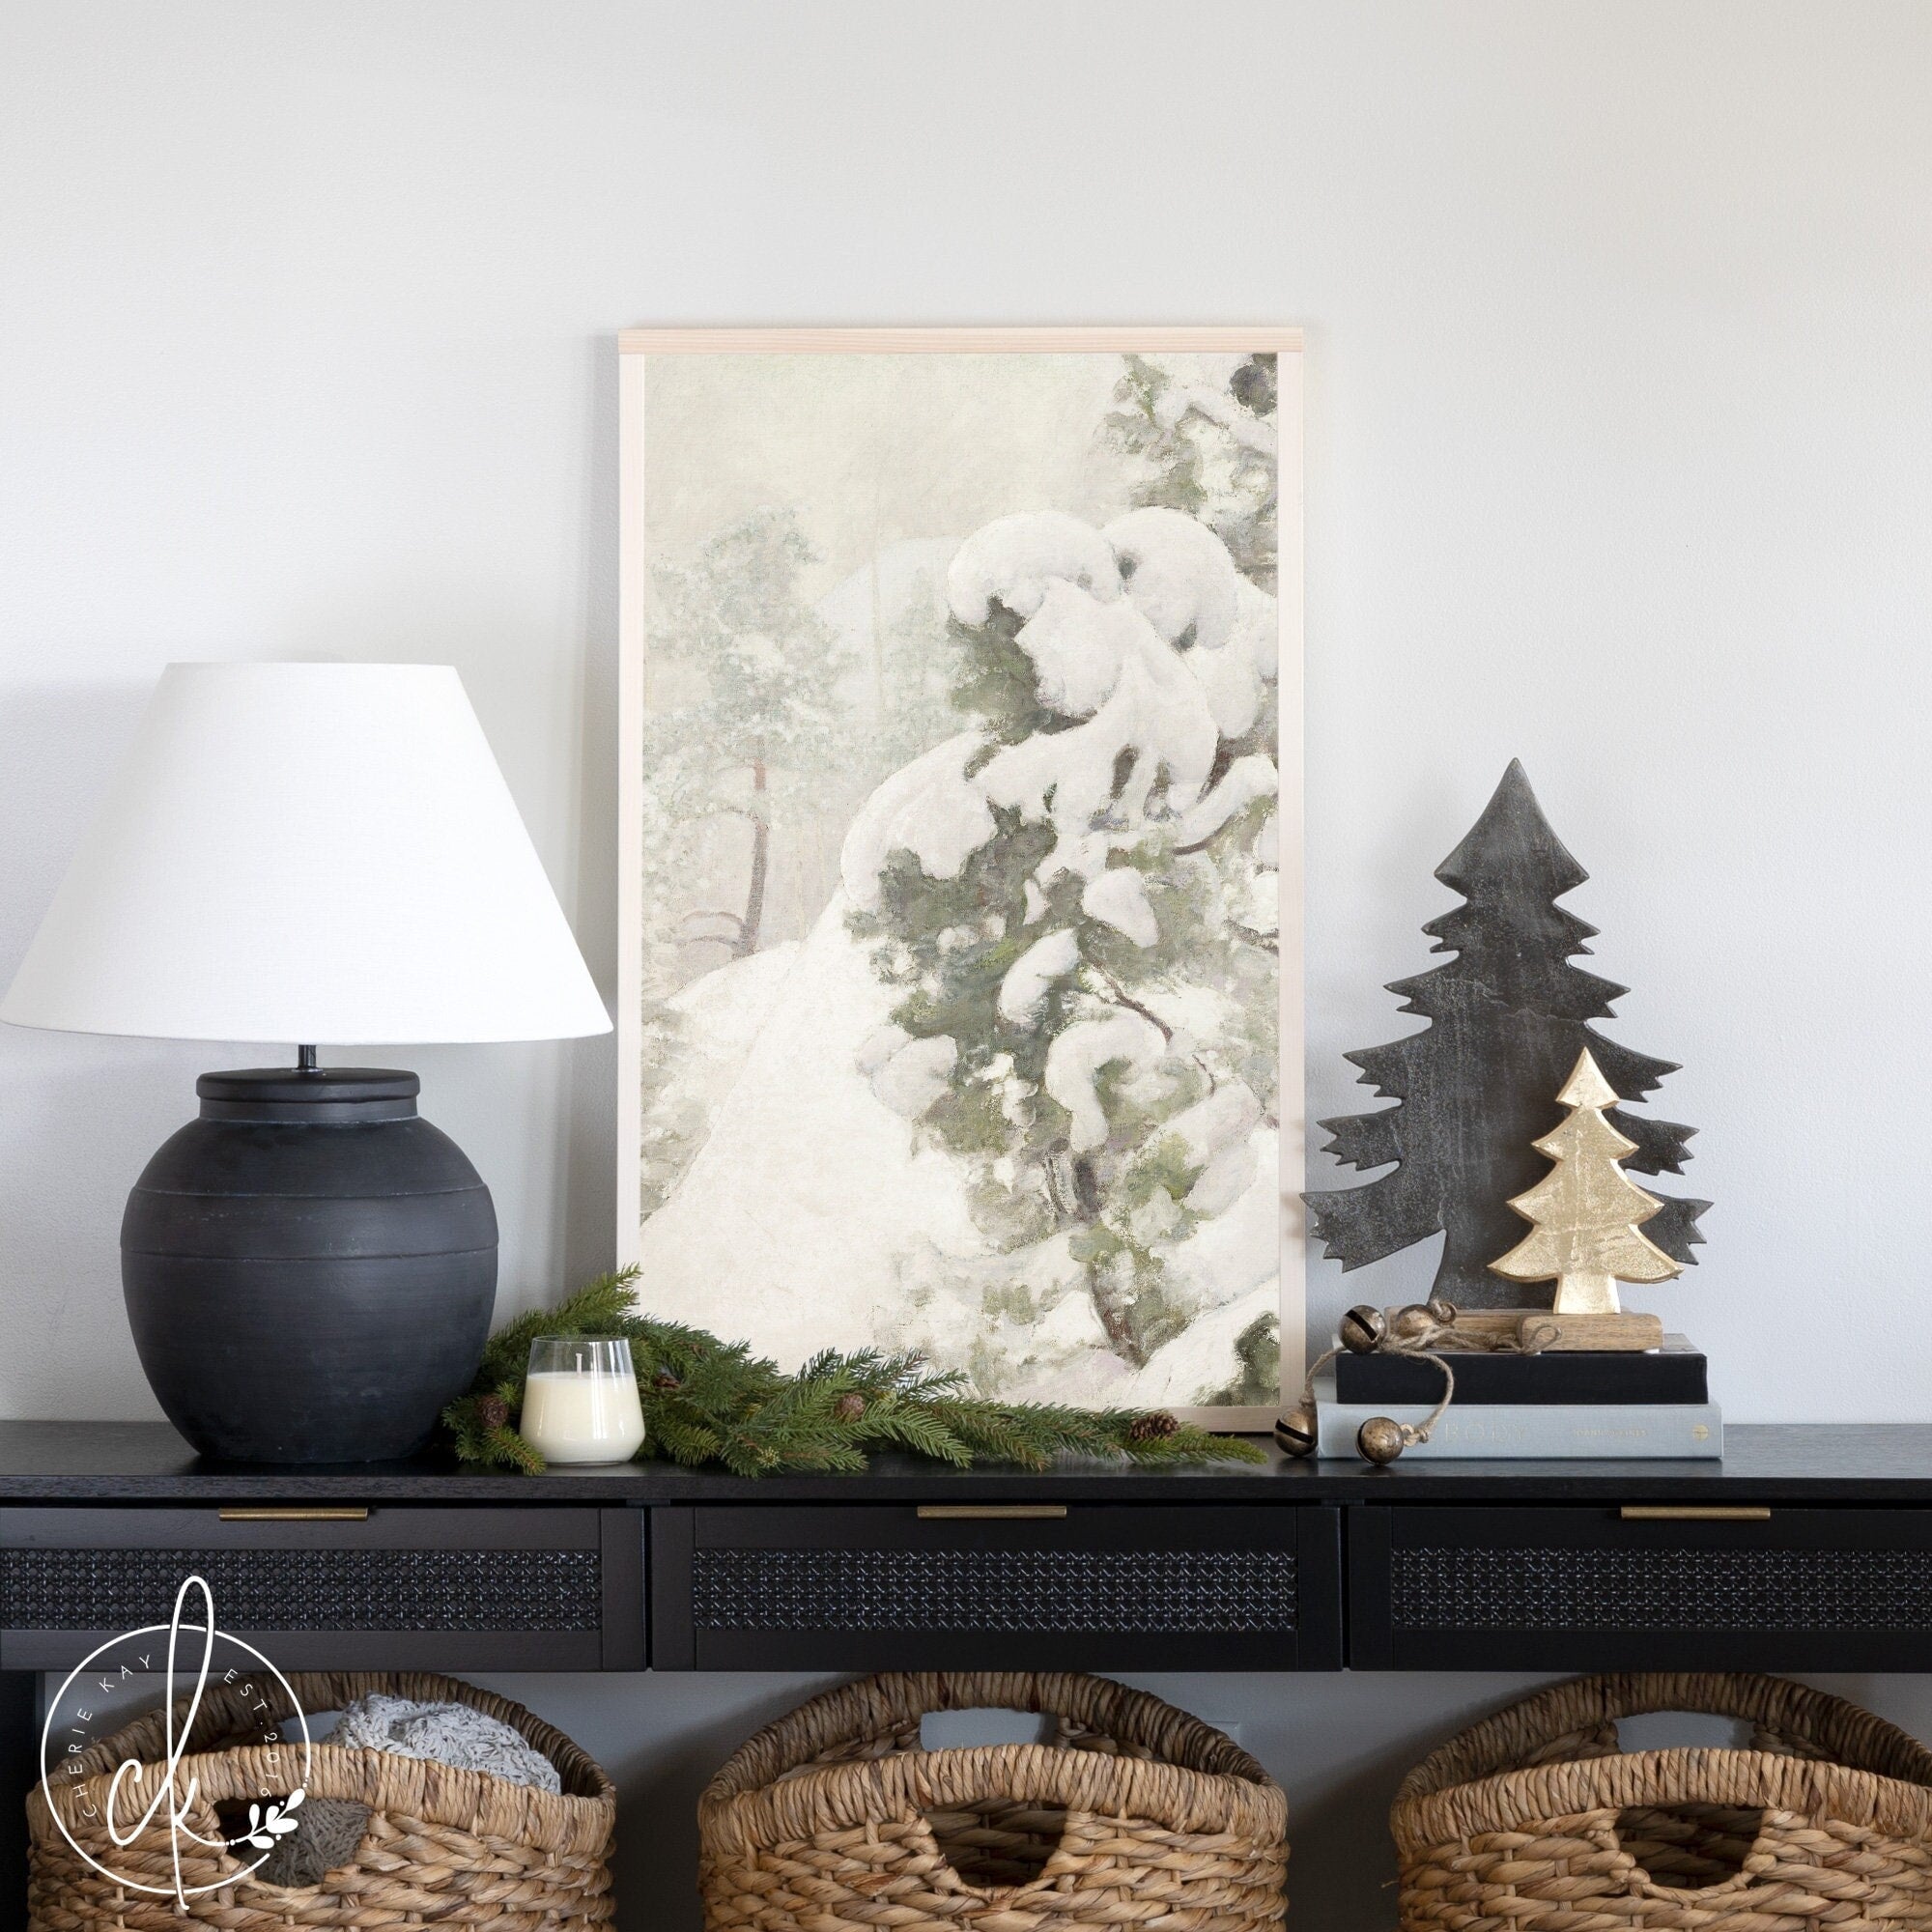 Snowy Wall Art | Christmas Wall Art | Framed Wall Art | Living Room Decor | Farmhouse Christmas Wall Decor | Snowy Tree Painting